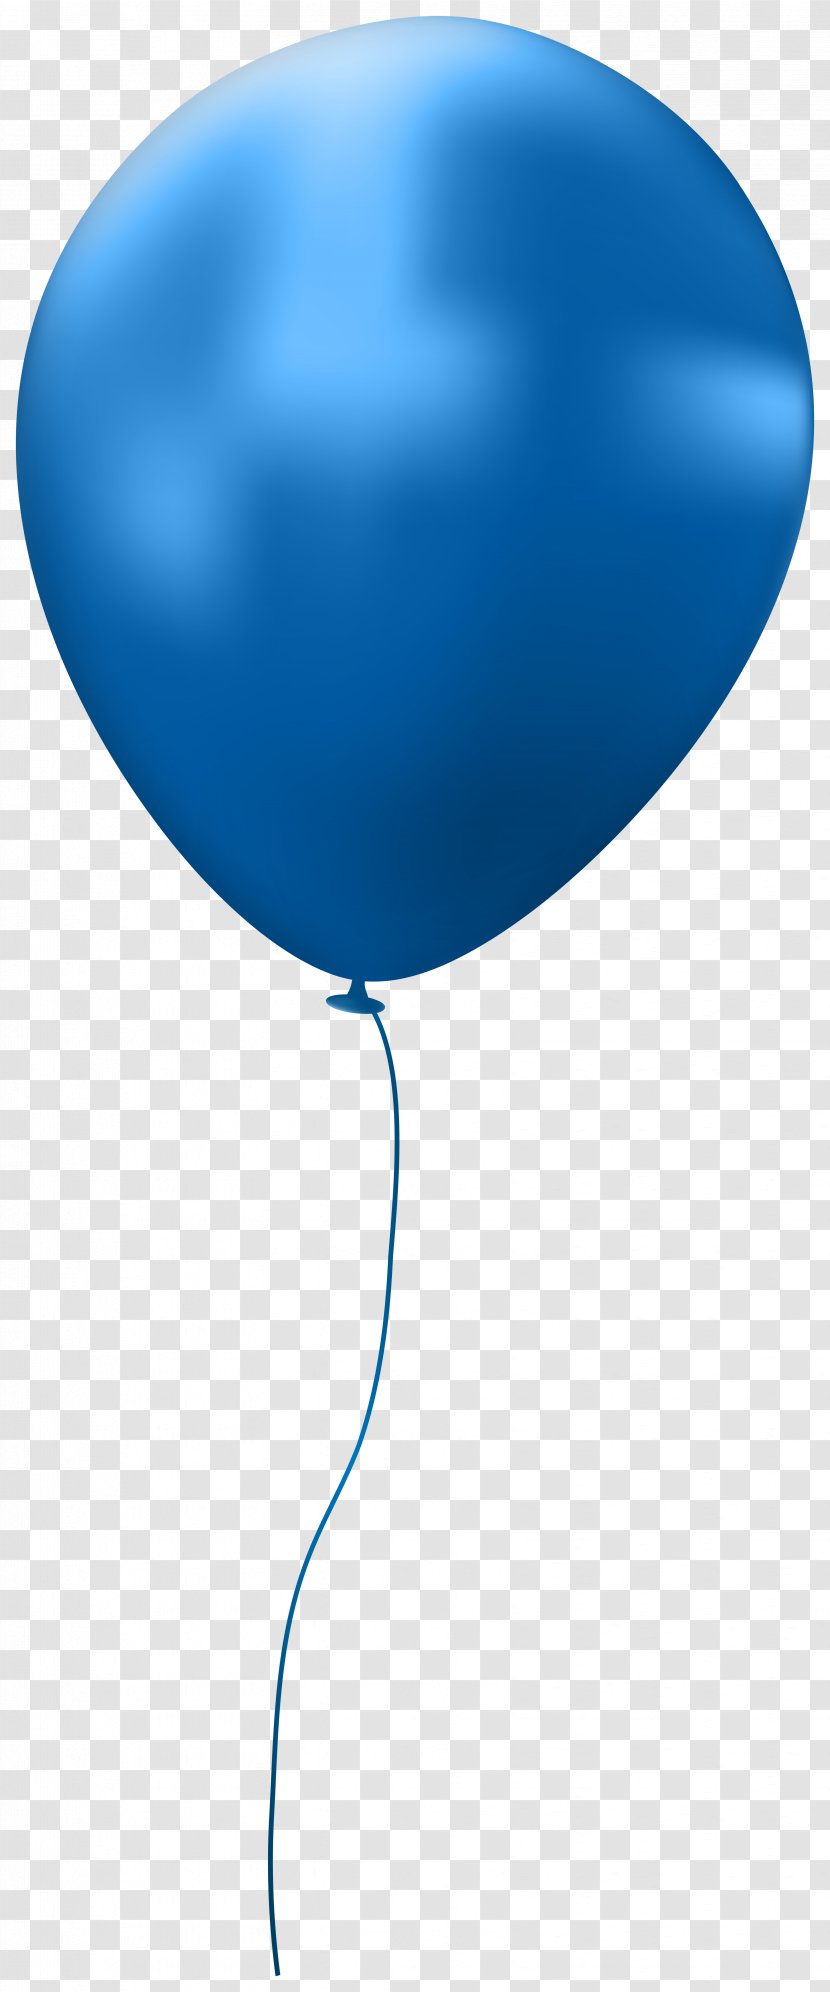 Qualatex Latex Balloon Image Clip Art - Electric Blue - Single Illustration Transparent PNG